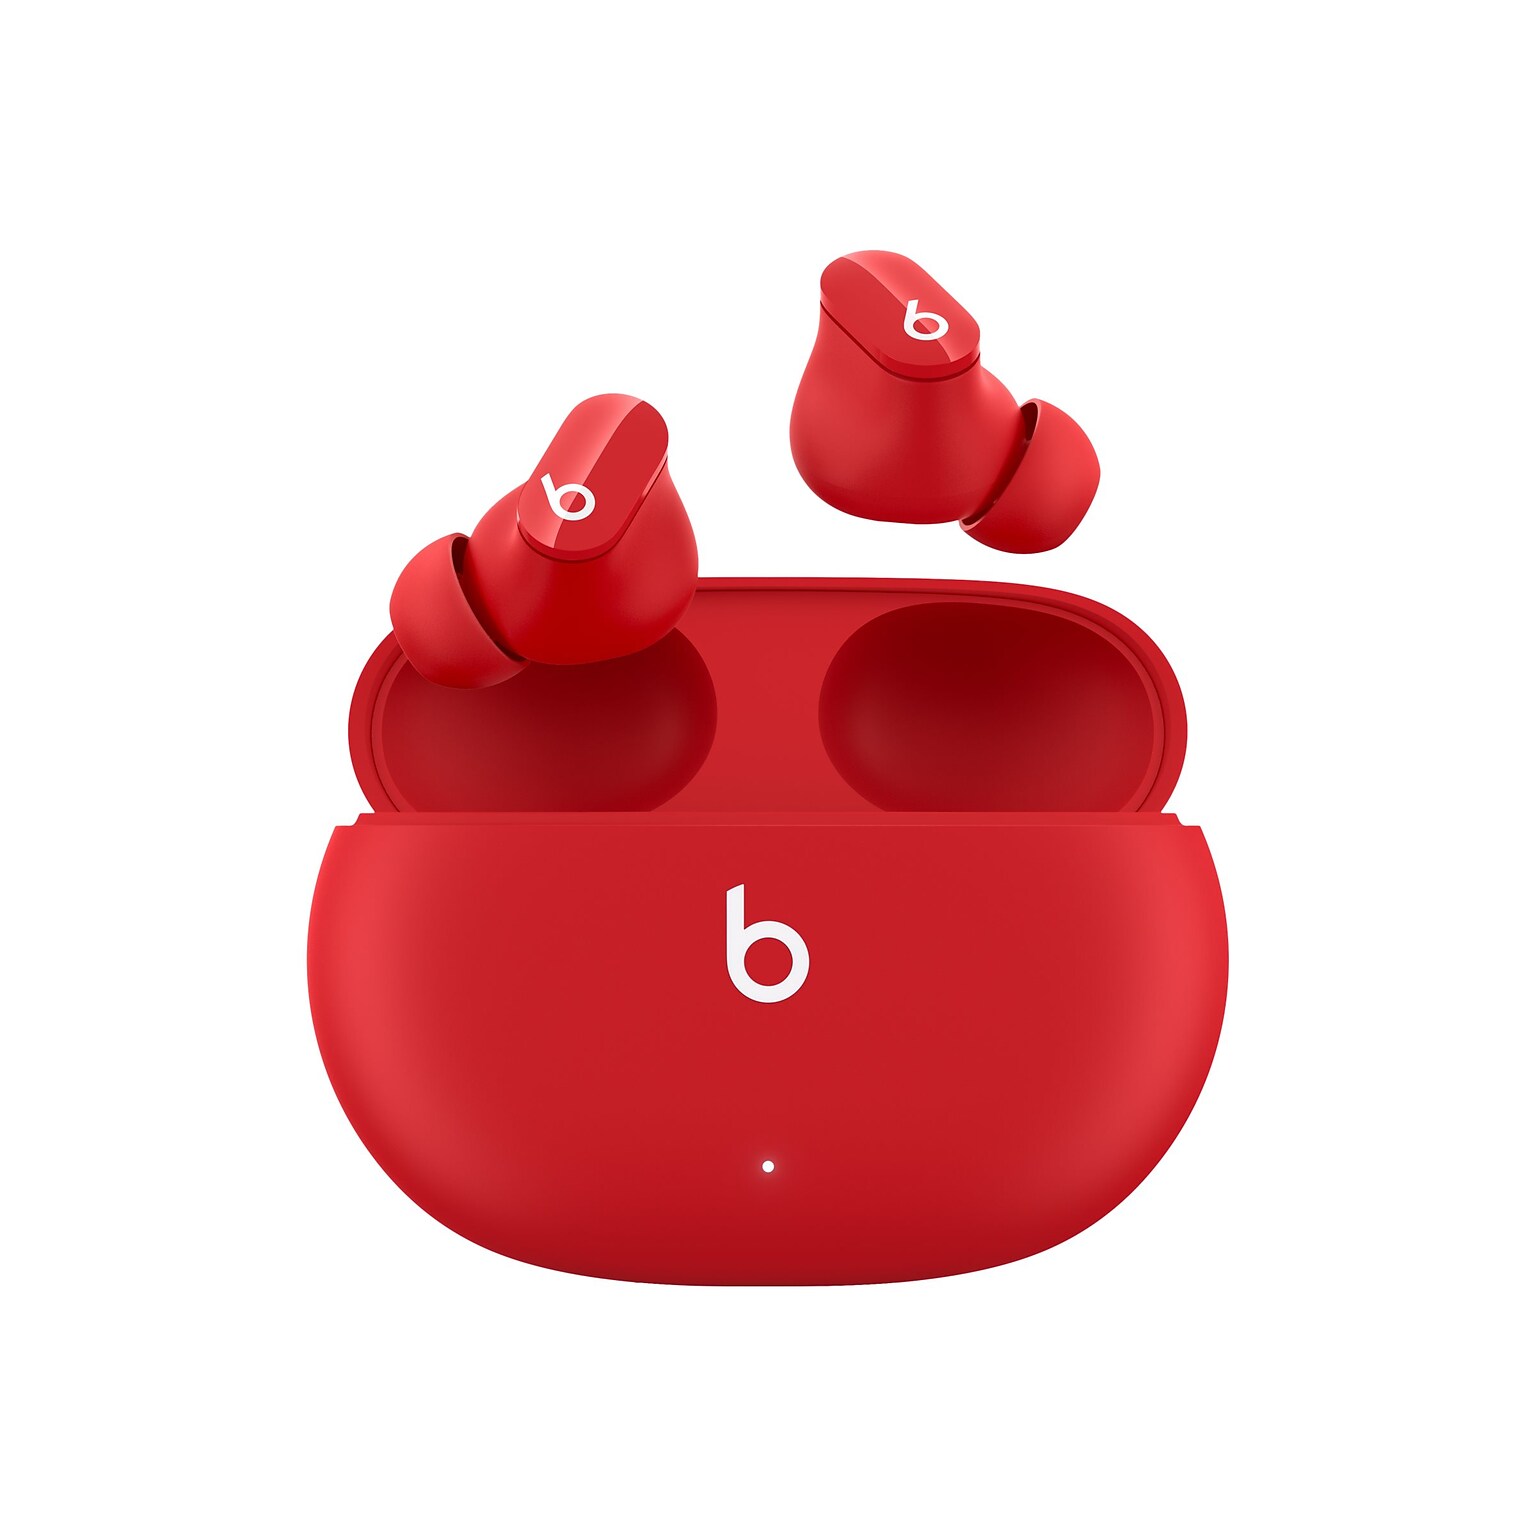 Beats Studio Buds Wireless Bluetooth Stereo Headphones, Red (MJ503LL/A)